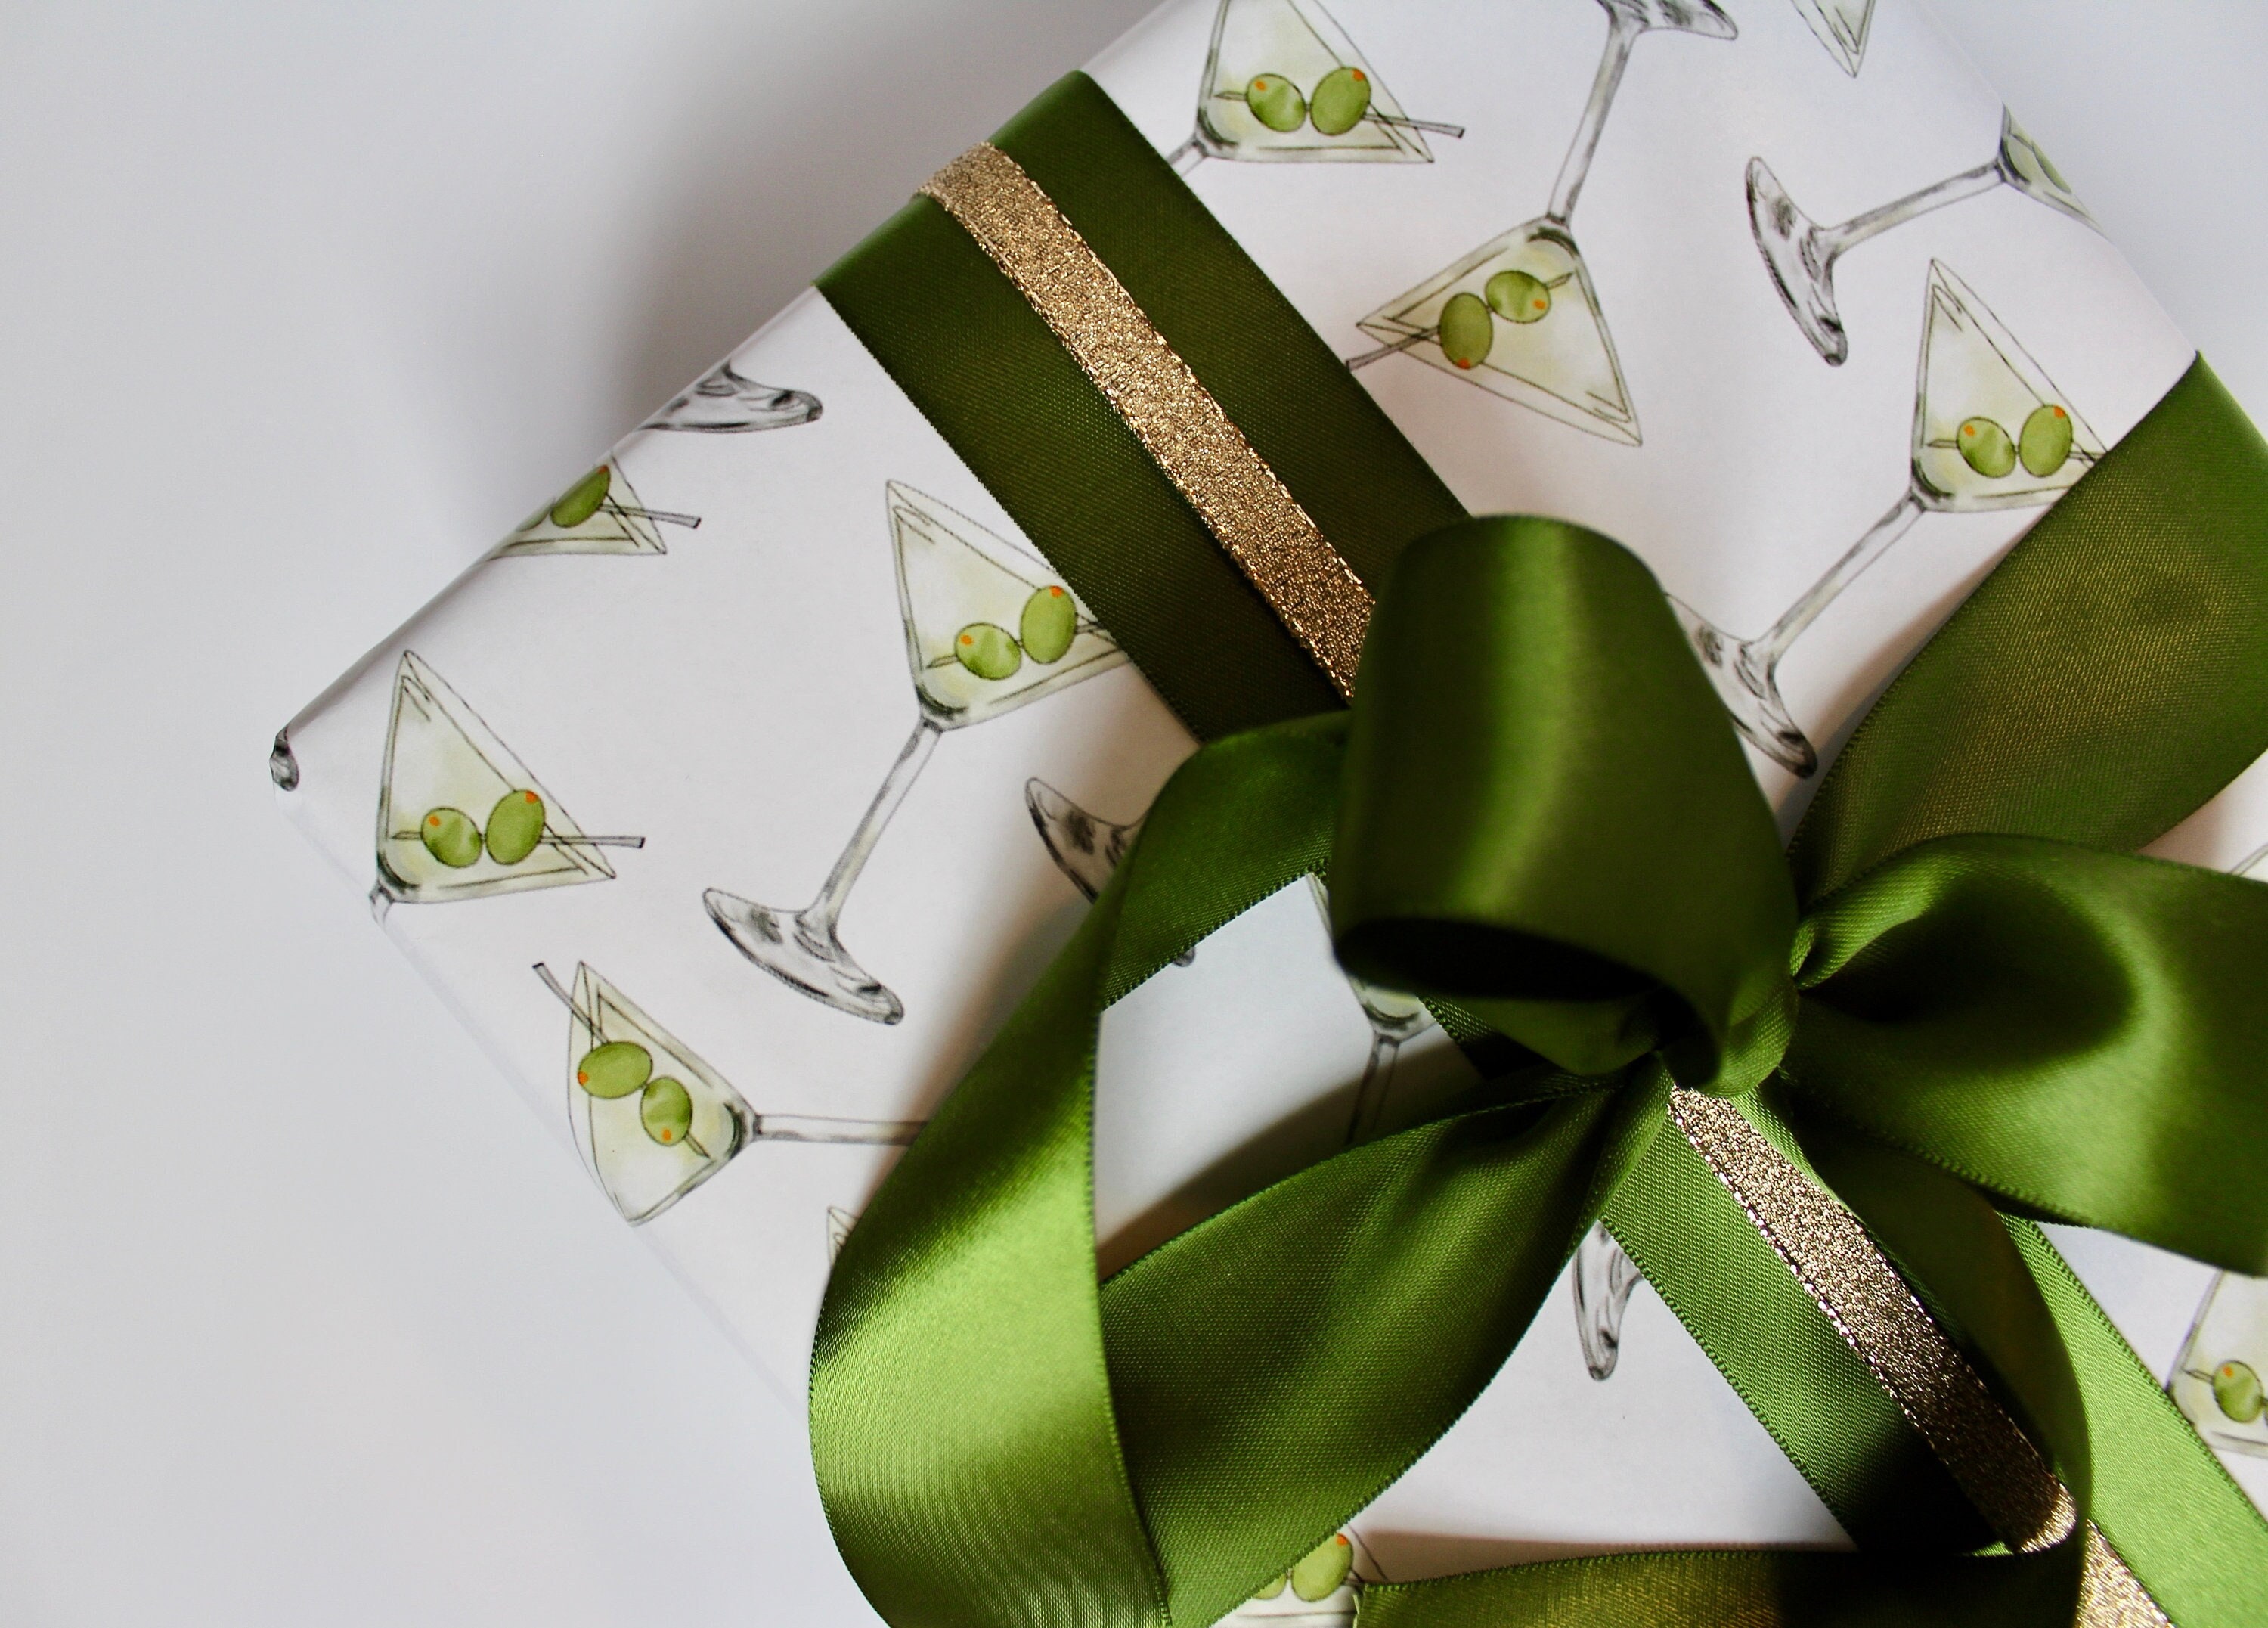 Botanical Sage Green Wrapping Paper Fern Floral Moth Nature Boho Gift Wrap  Sheet 